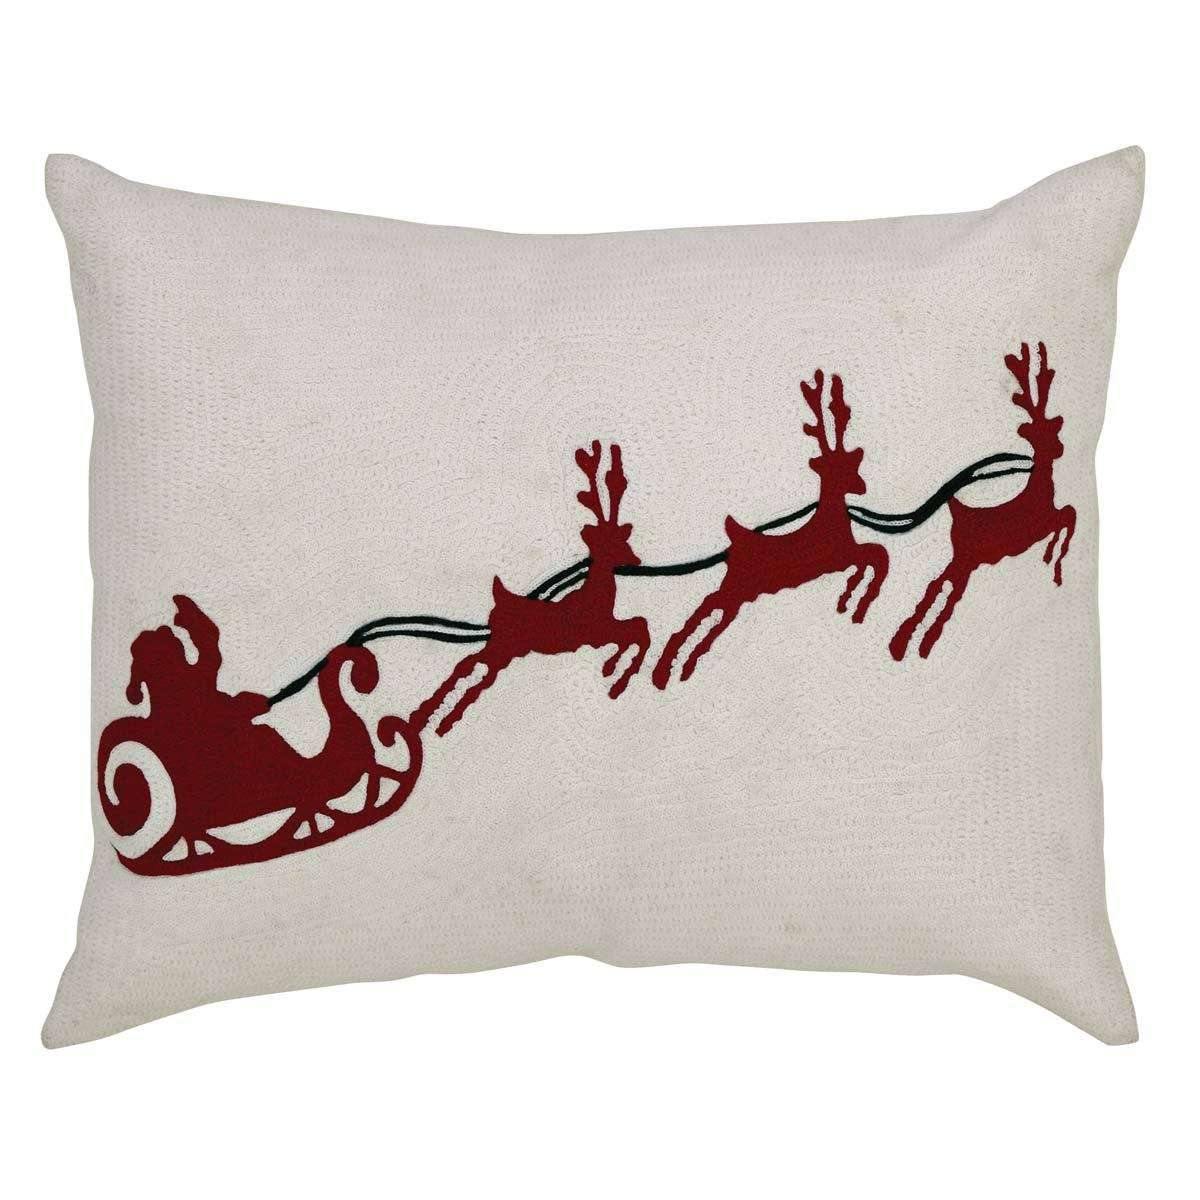 Santa Sleigh Pillow 14x18 - The Fox Decor